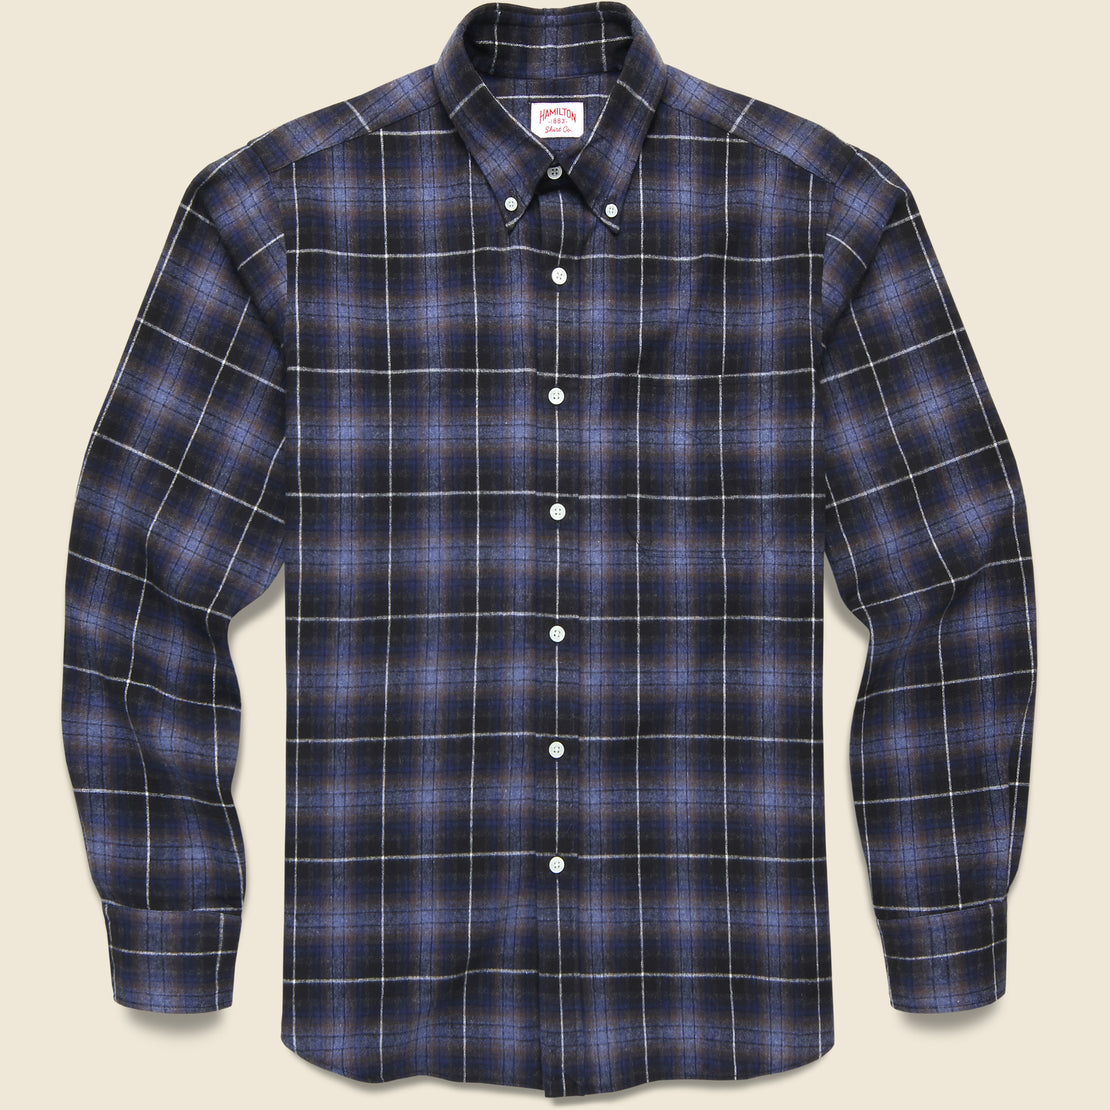 Hamilton Shirt Co. Check Twill Flannel Shirt -  Navy/Brown/White